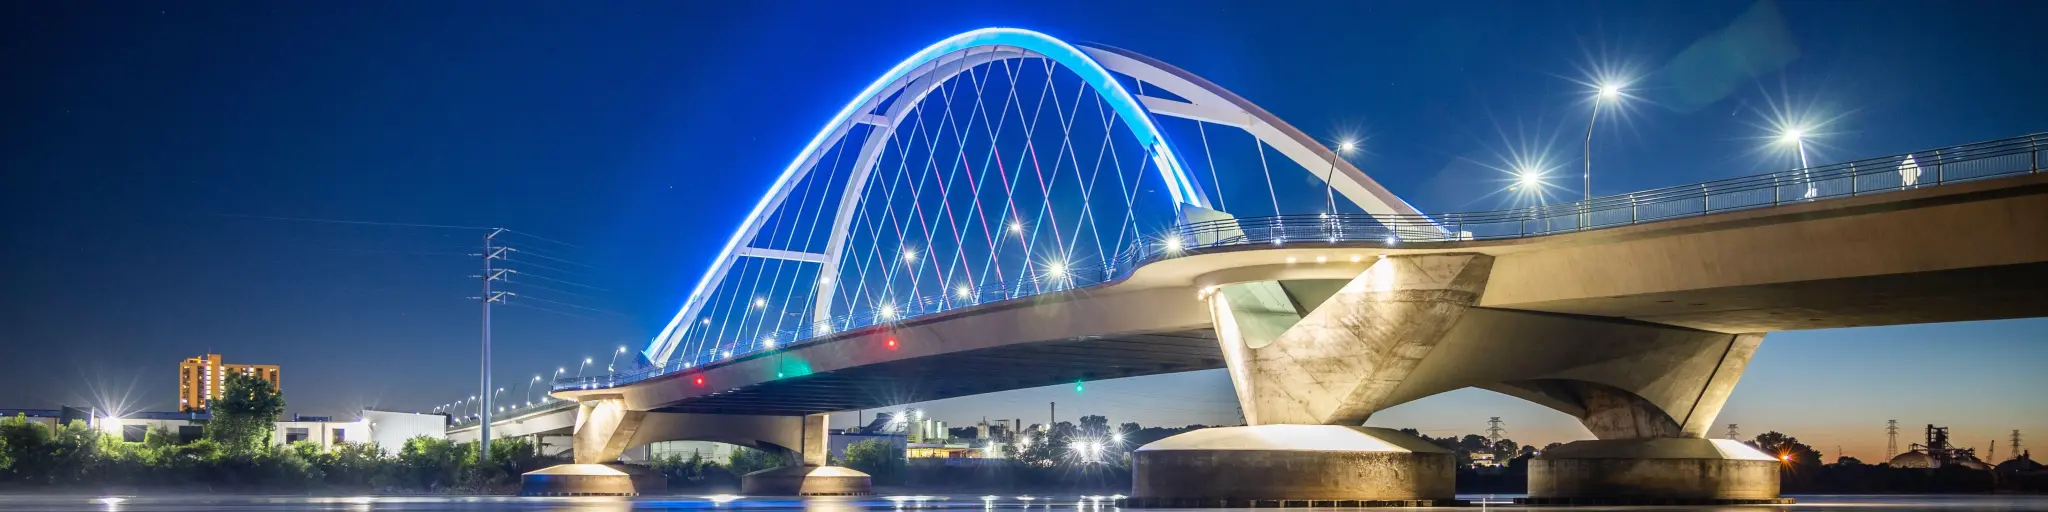 Bridge in Minneapolis, lit up at night